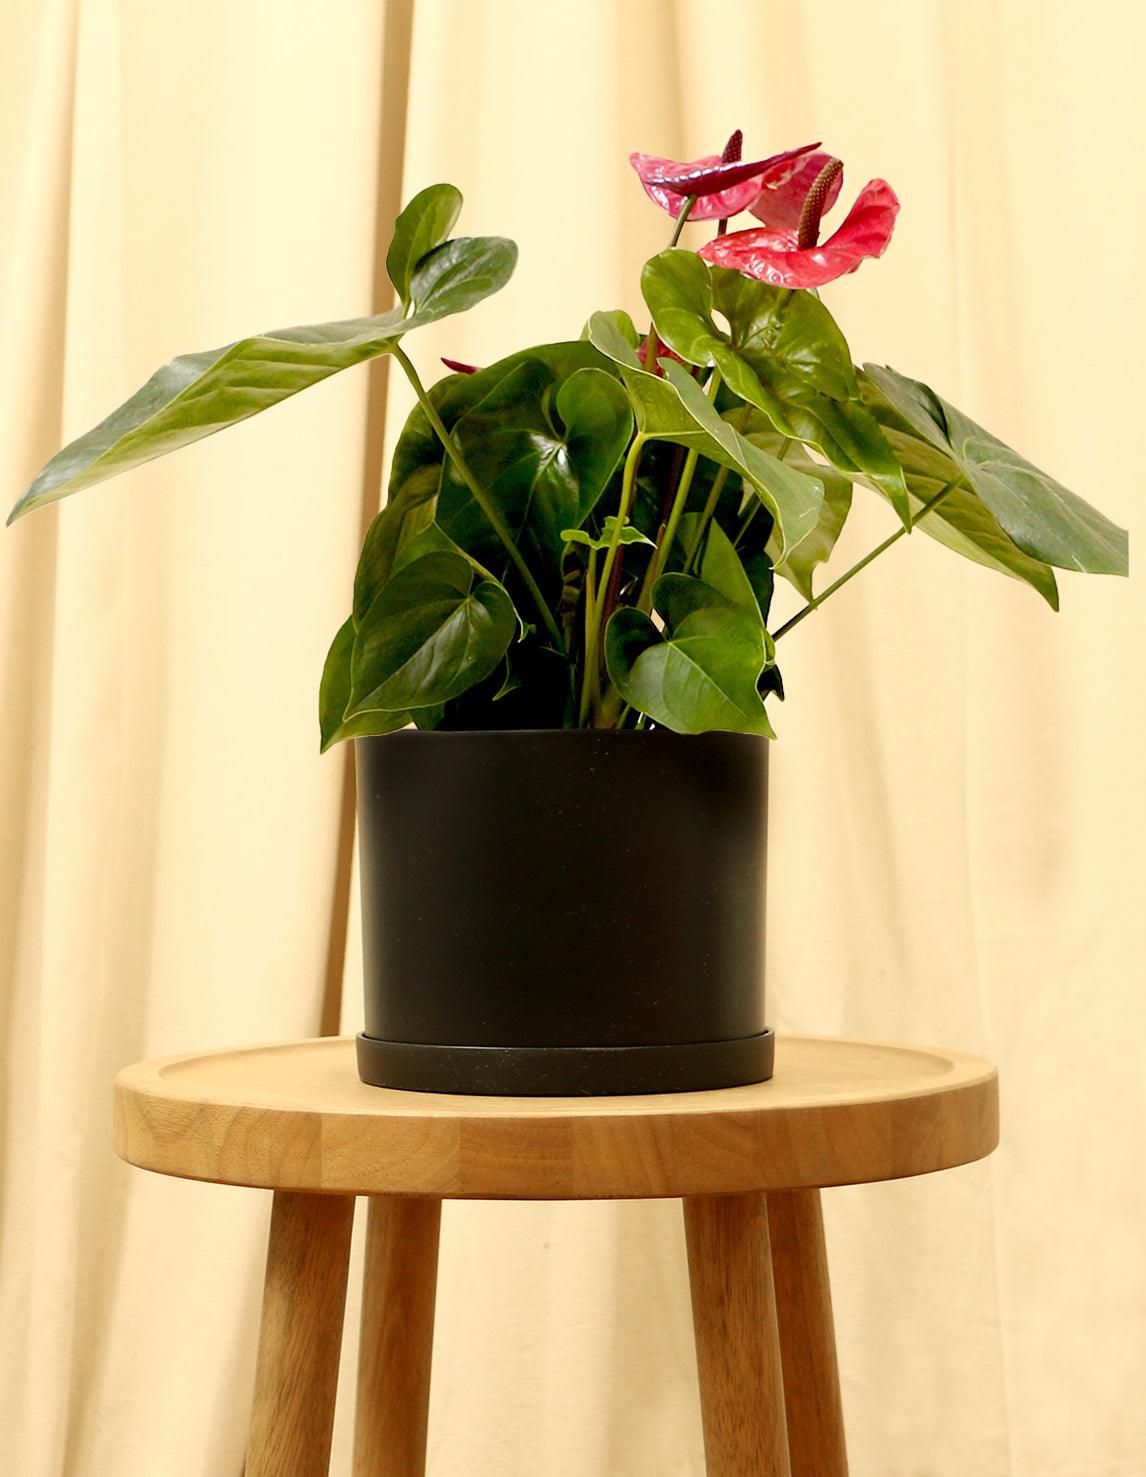 Medium Red Anthurium Tailflower in black pot.